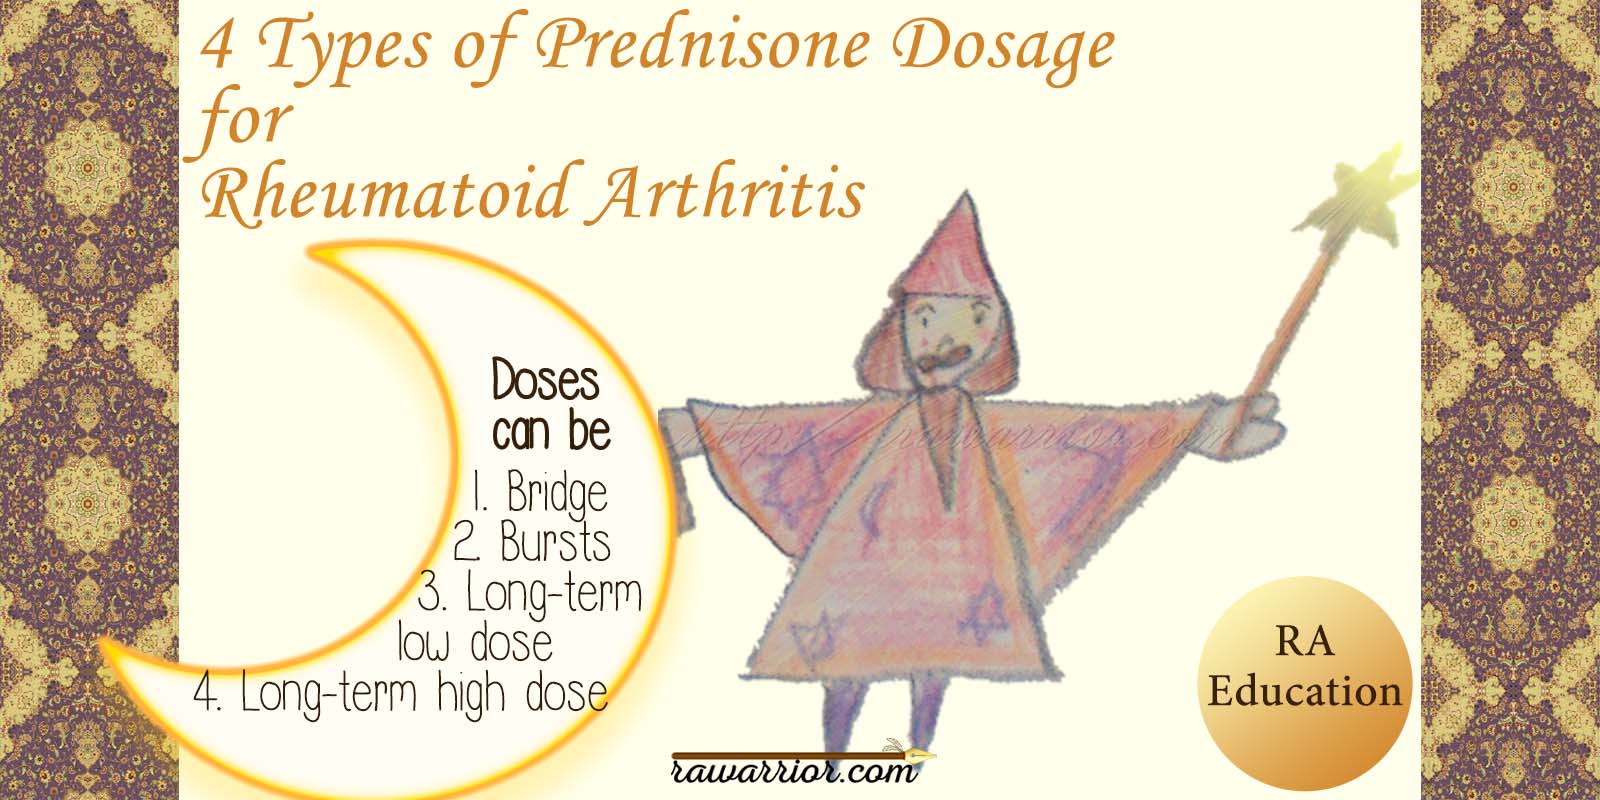 Prednisone Dosage for Rheumatoid Arthritis